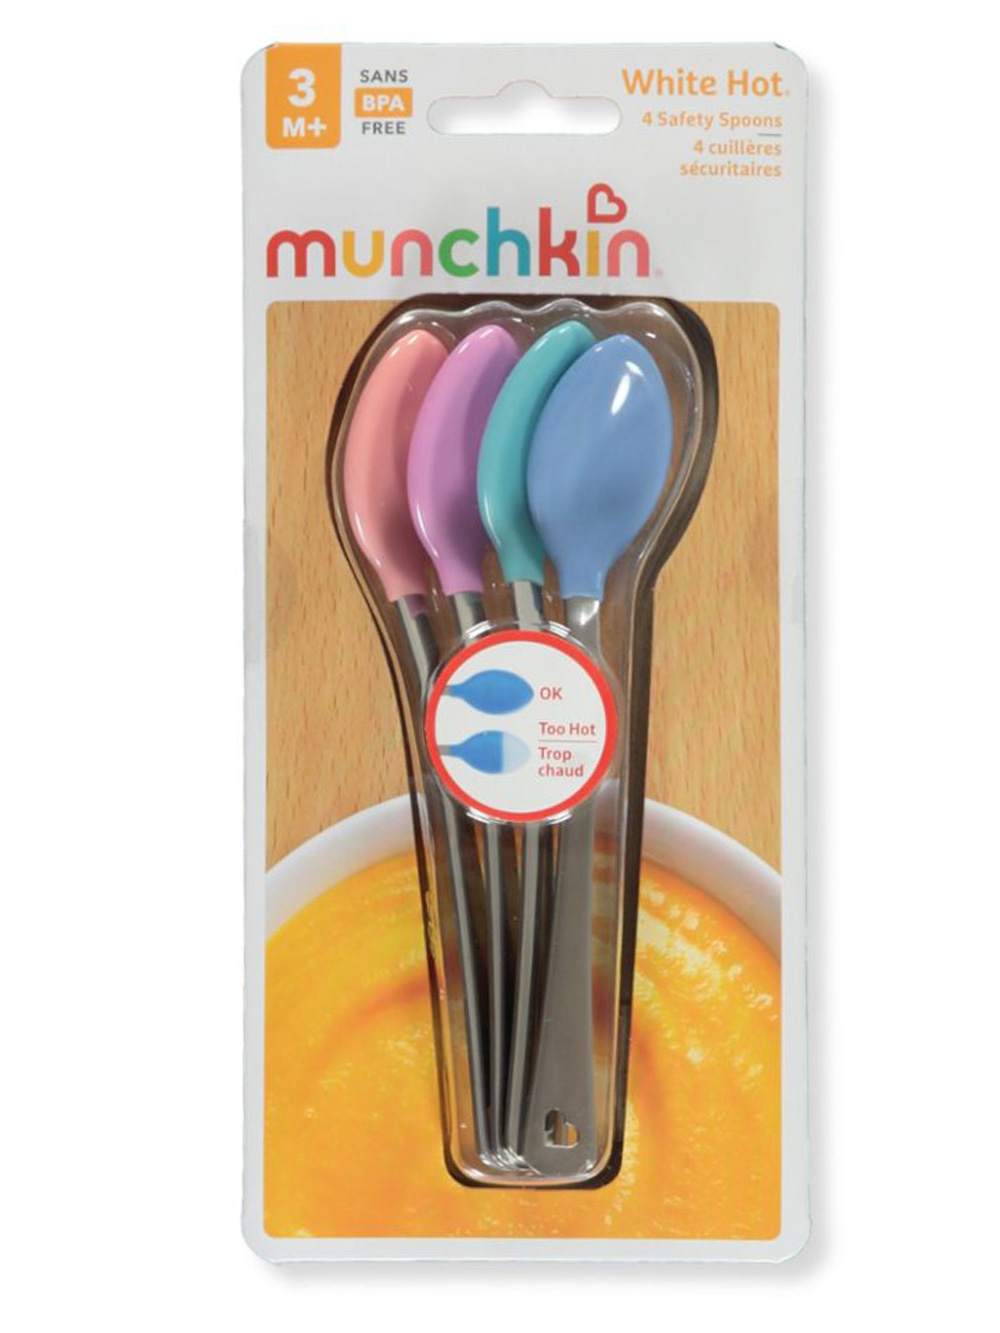 Munchkin White Hot Safety Spoons - 4 Spoons, Munchkin